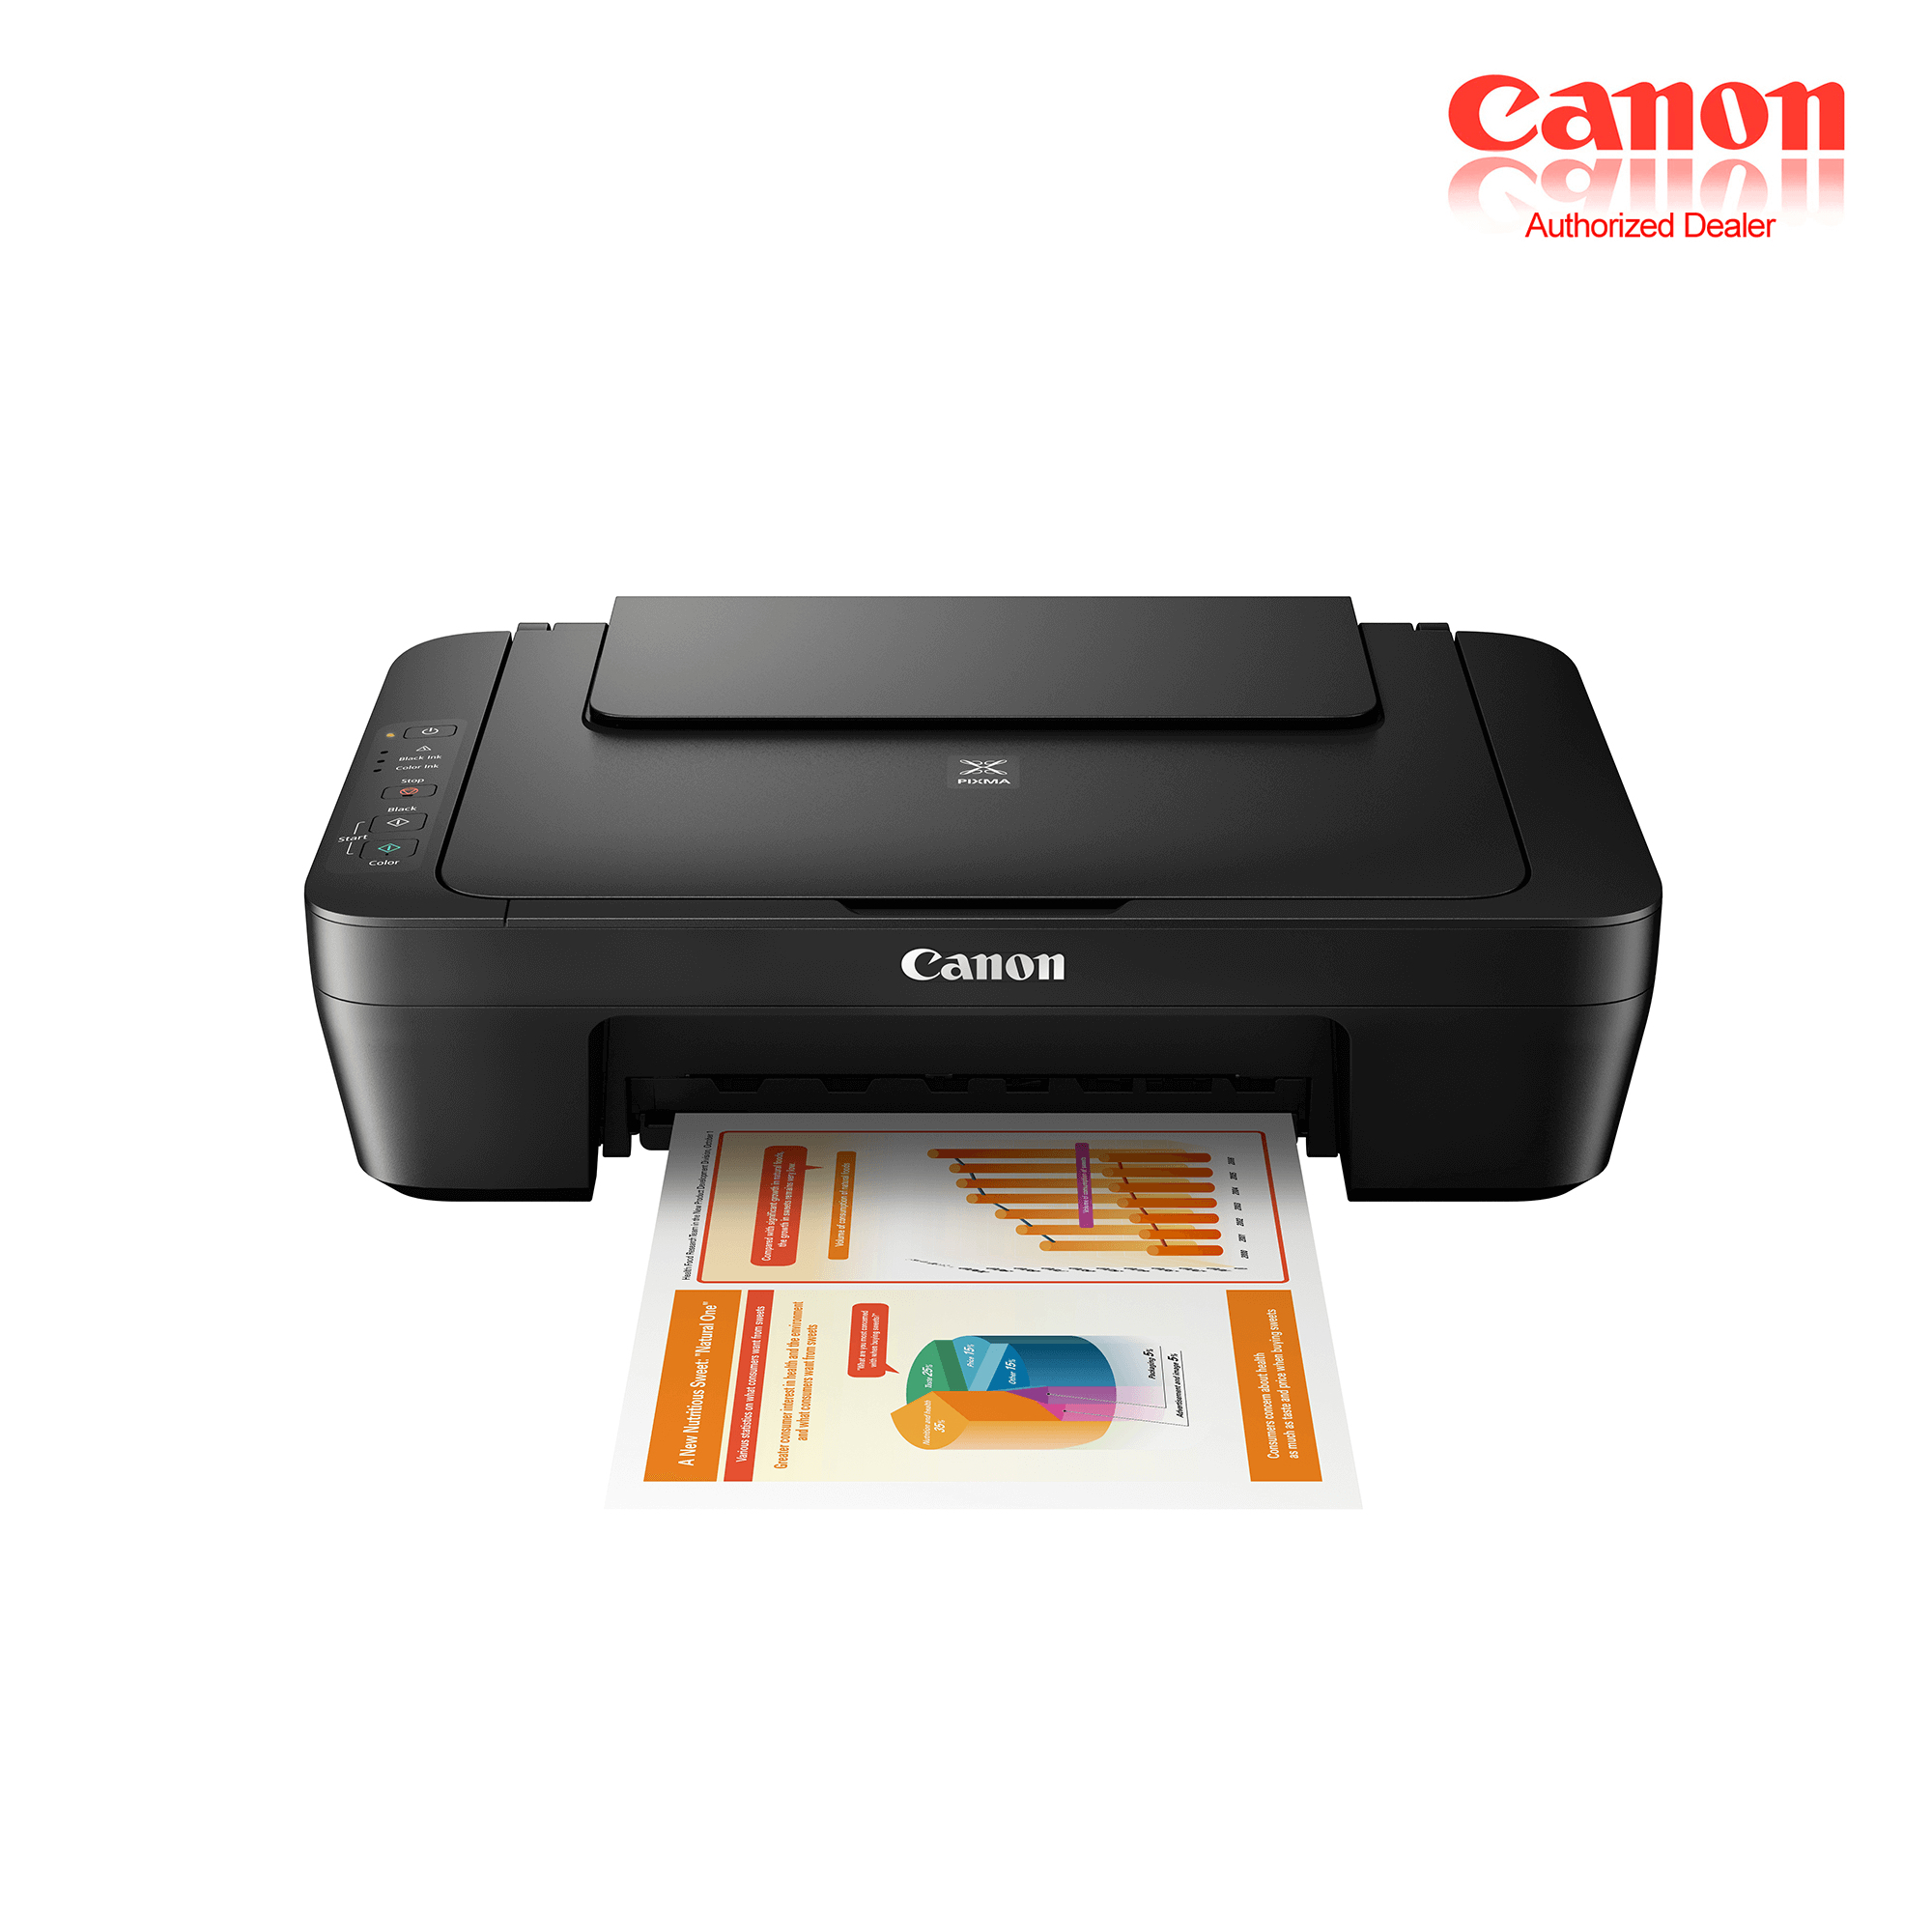 Canon MG2570s 3in1 Printer